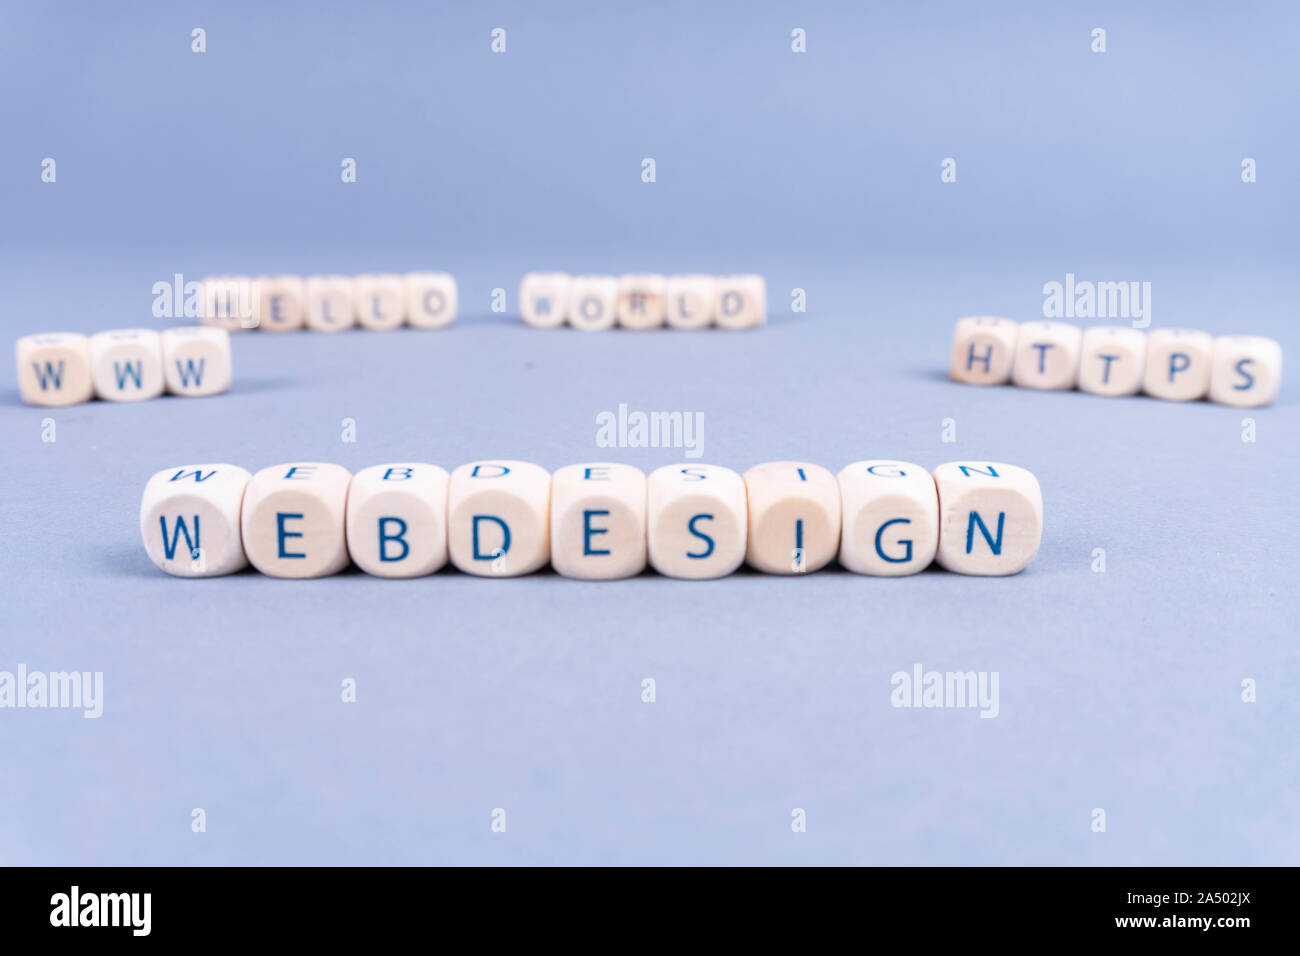 Letters saying Webdesign, Hello World, WWW, HTTPS - Webdesign Internet concept Stock Photo